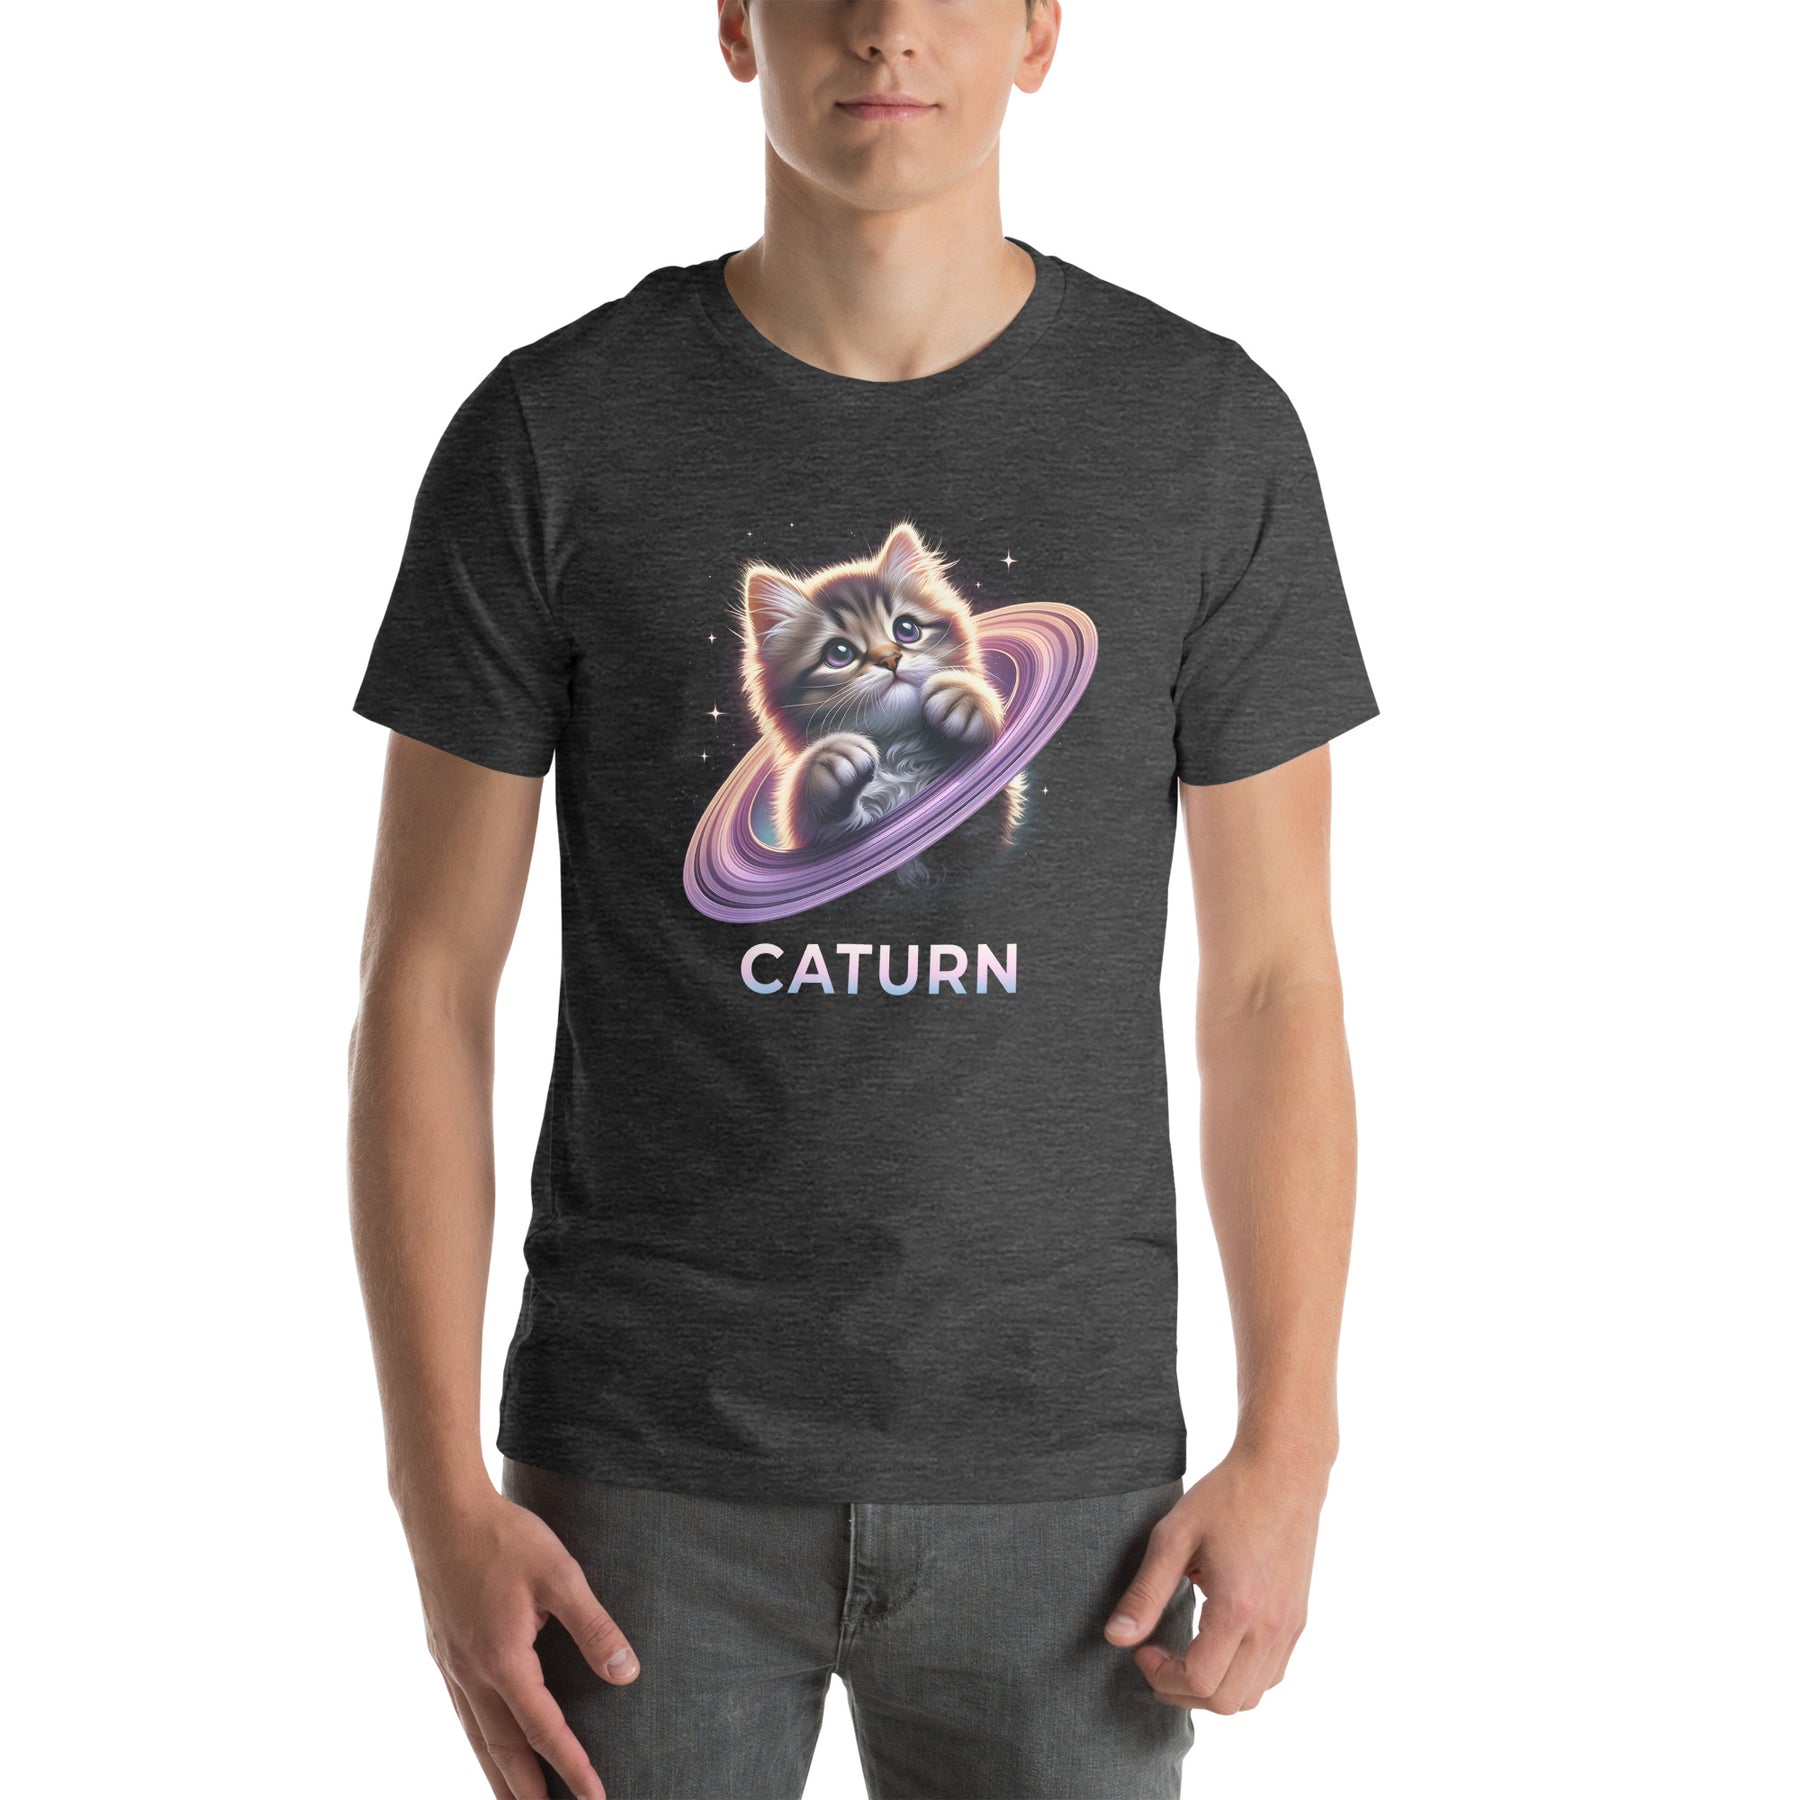 Caturn Saturn Space Cat Shirt - Cute Kawaii Kitty for Feline & Astronomy Fan